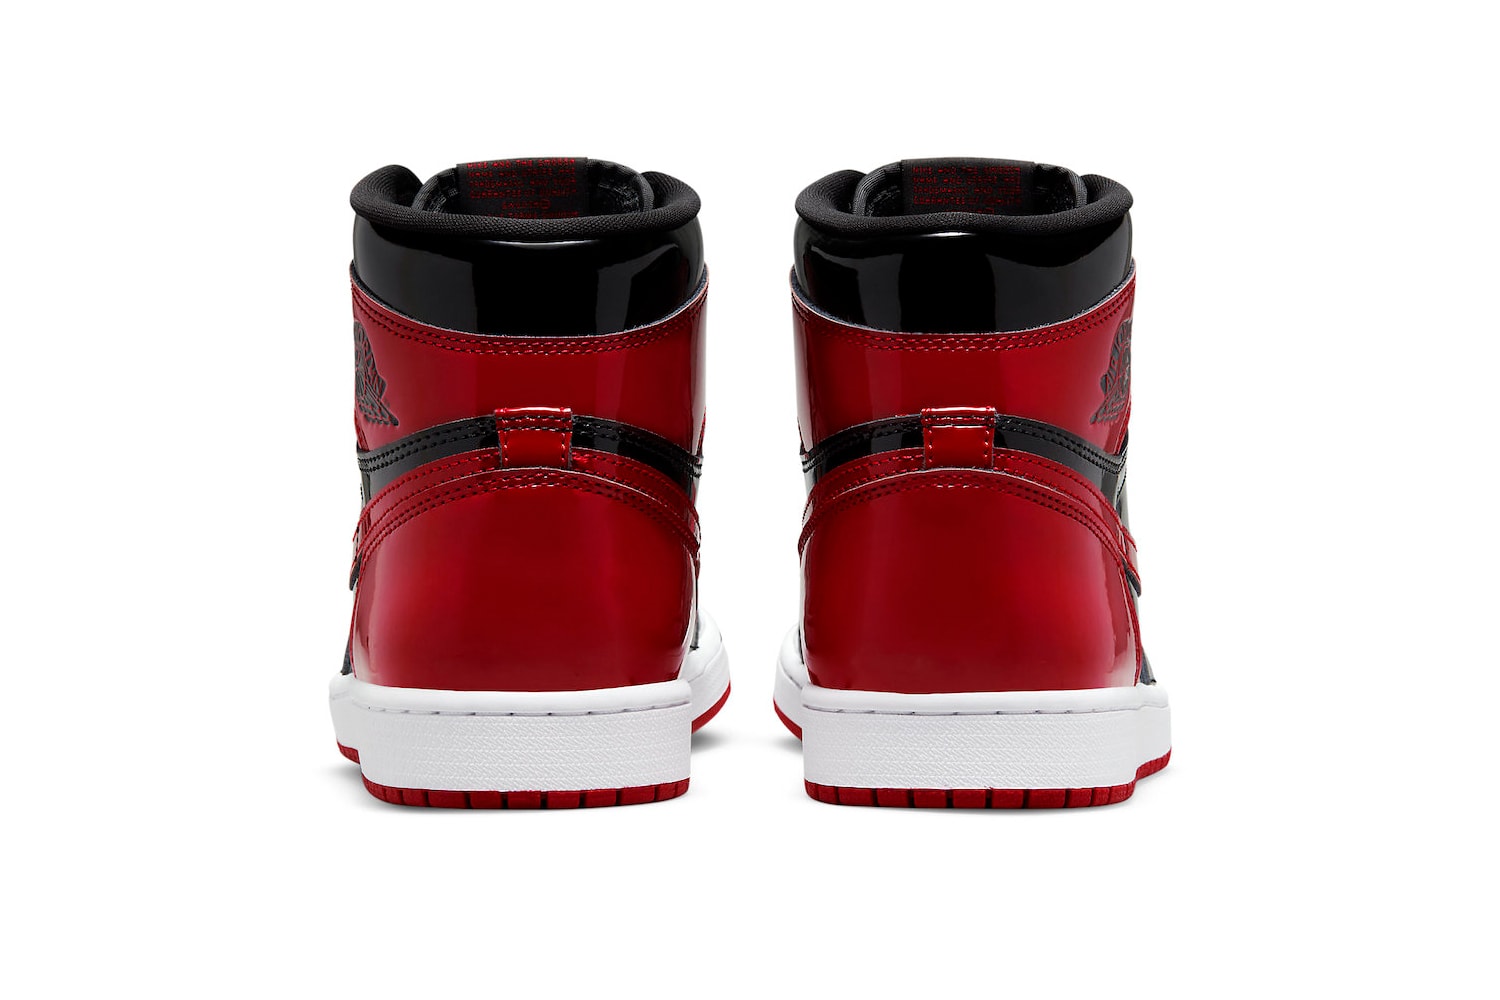 Air Jordan 1 High OG Bred Patent Official Look Release Info 555088-063 Date Buy Price Black White Varsity Red